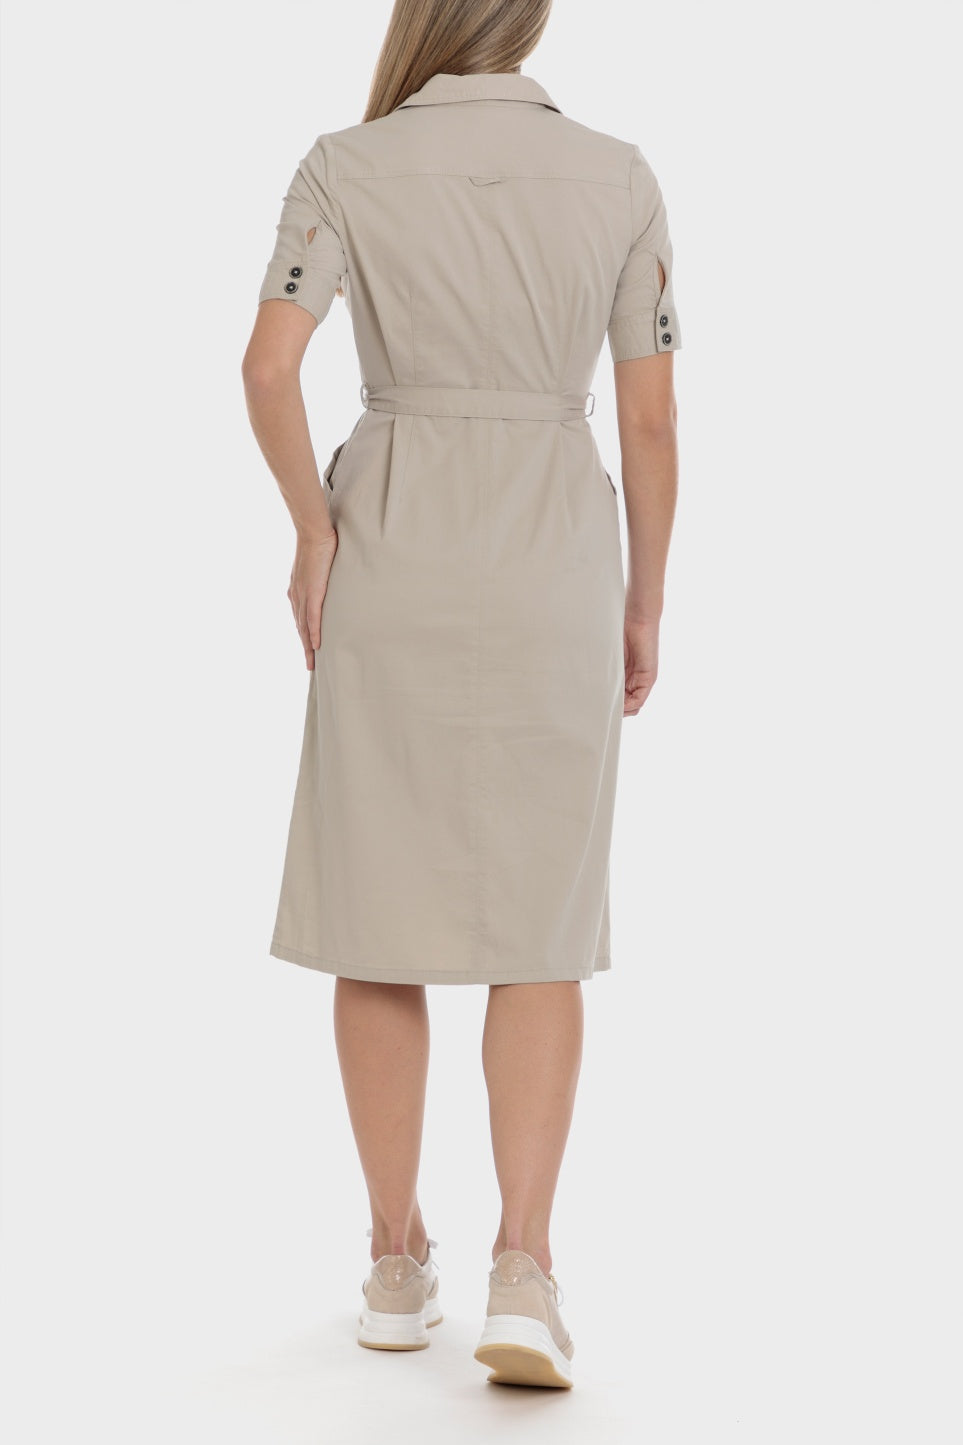 Punt Roma Shirt Dress - Beige 2 Shaws Department Stores